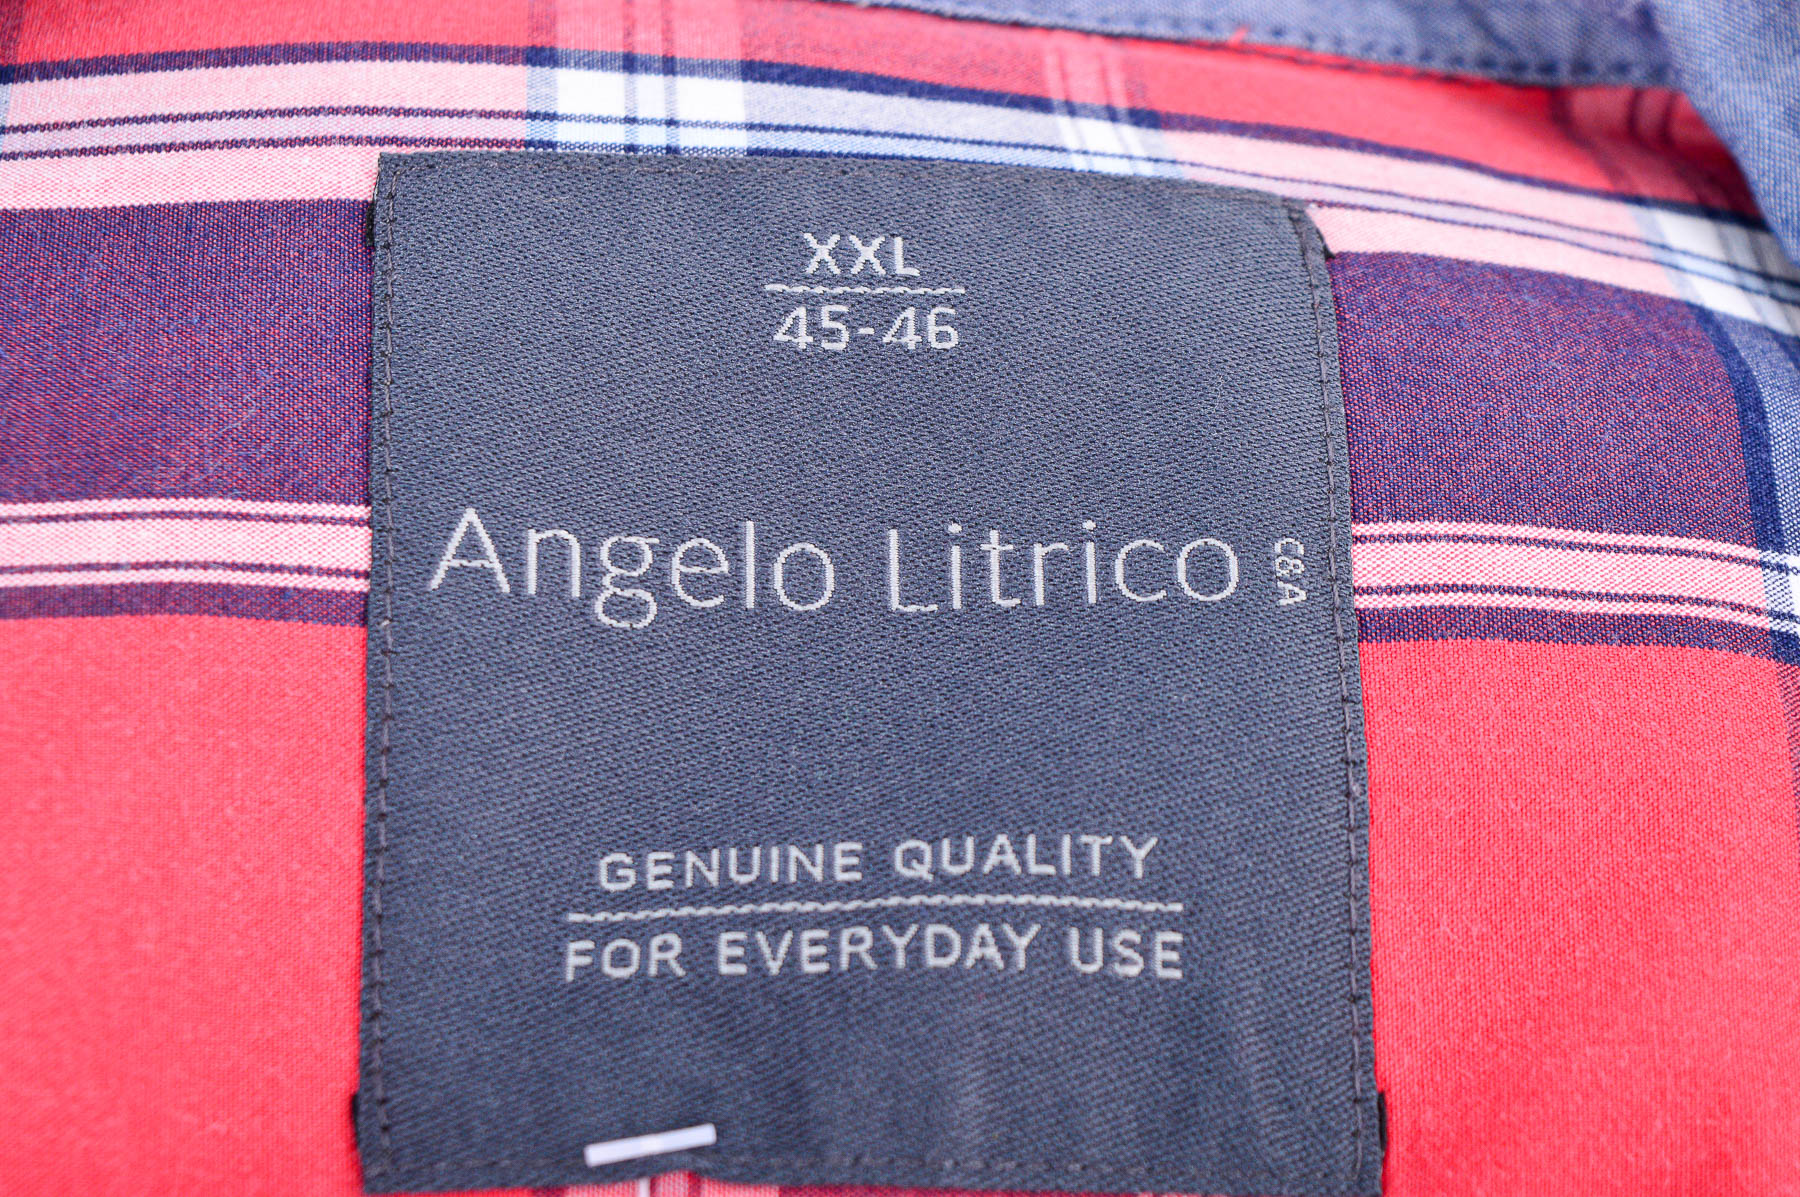 Men's shirt - Angelo Litrico - 2